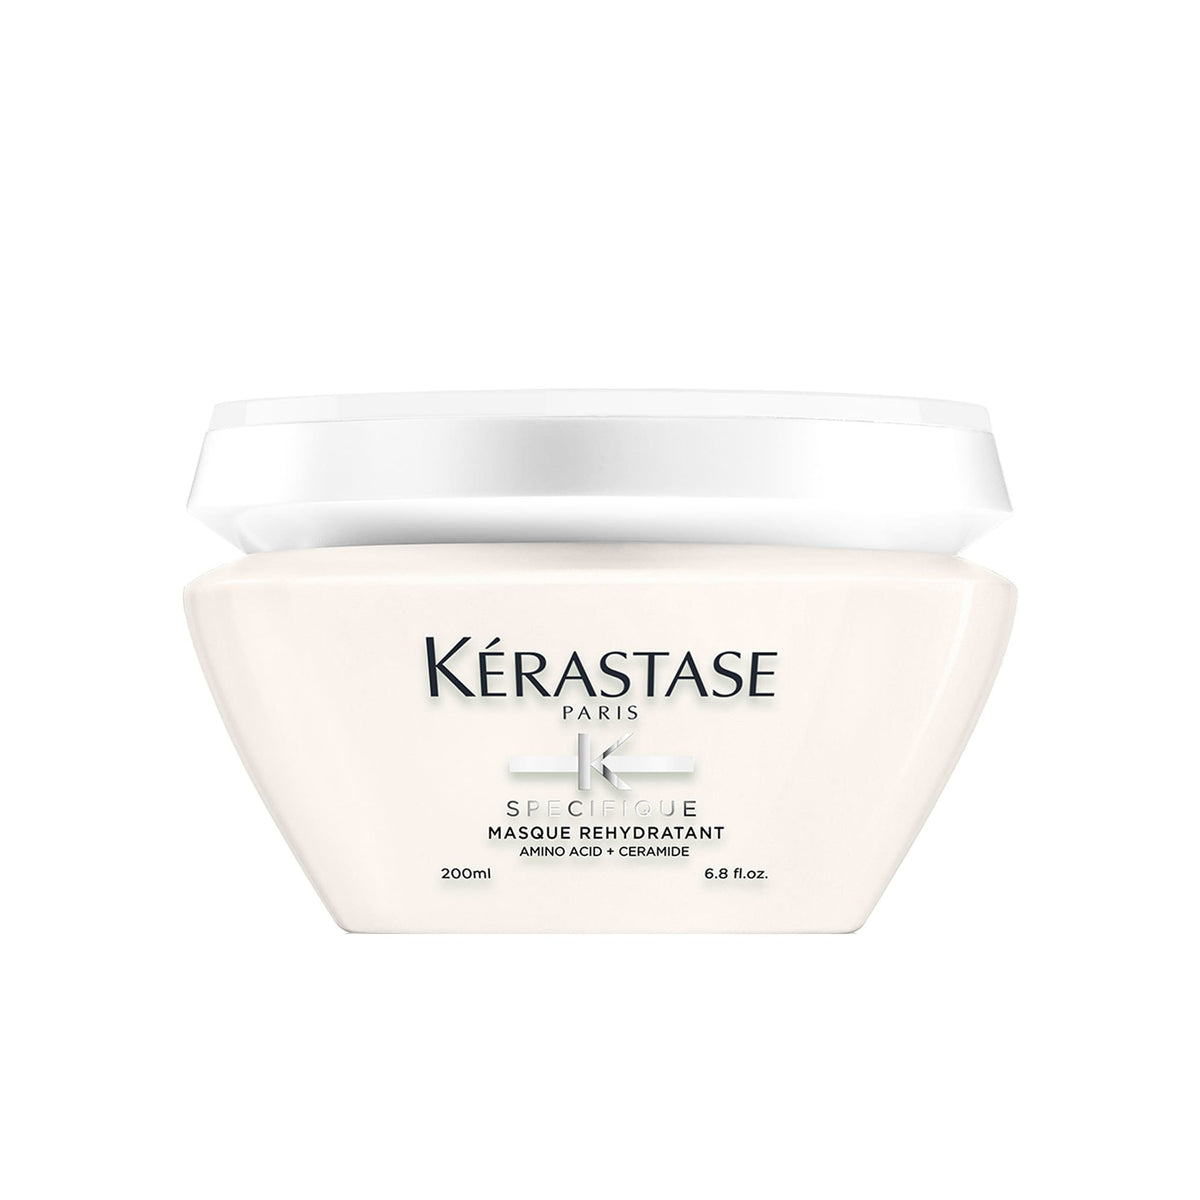 Kérastase Masque Rehydratant 200ml - Shop online | Retail Box